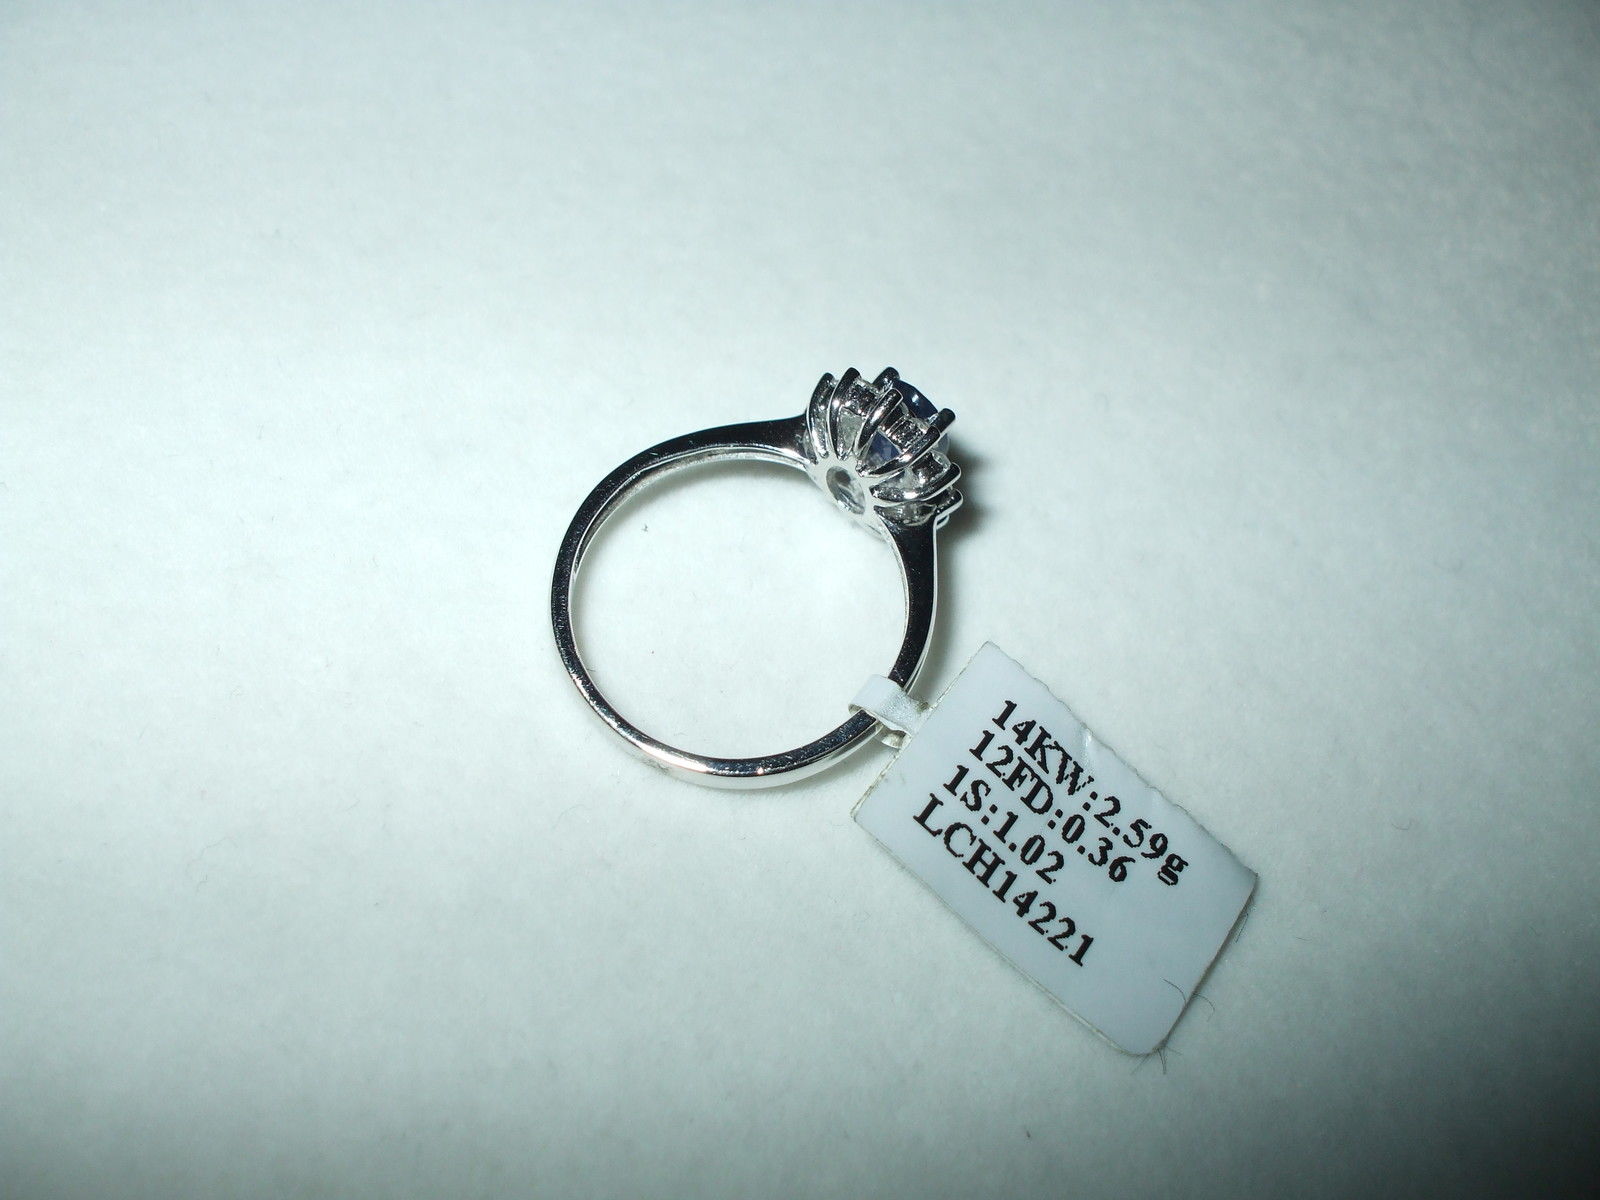 Genuine 1.02 ct Blue Sapphire & Diamond Ring 14K white gold $1050 NWT